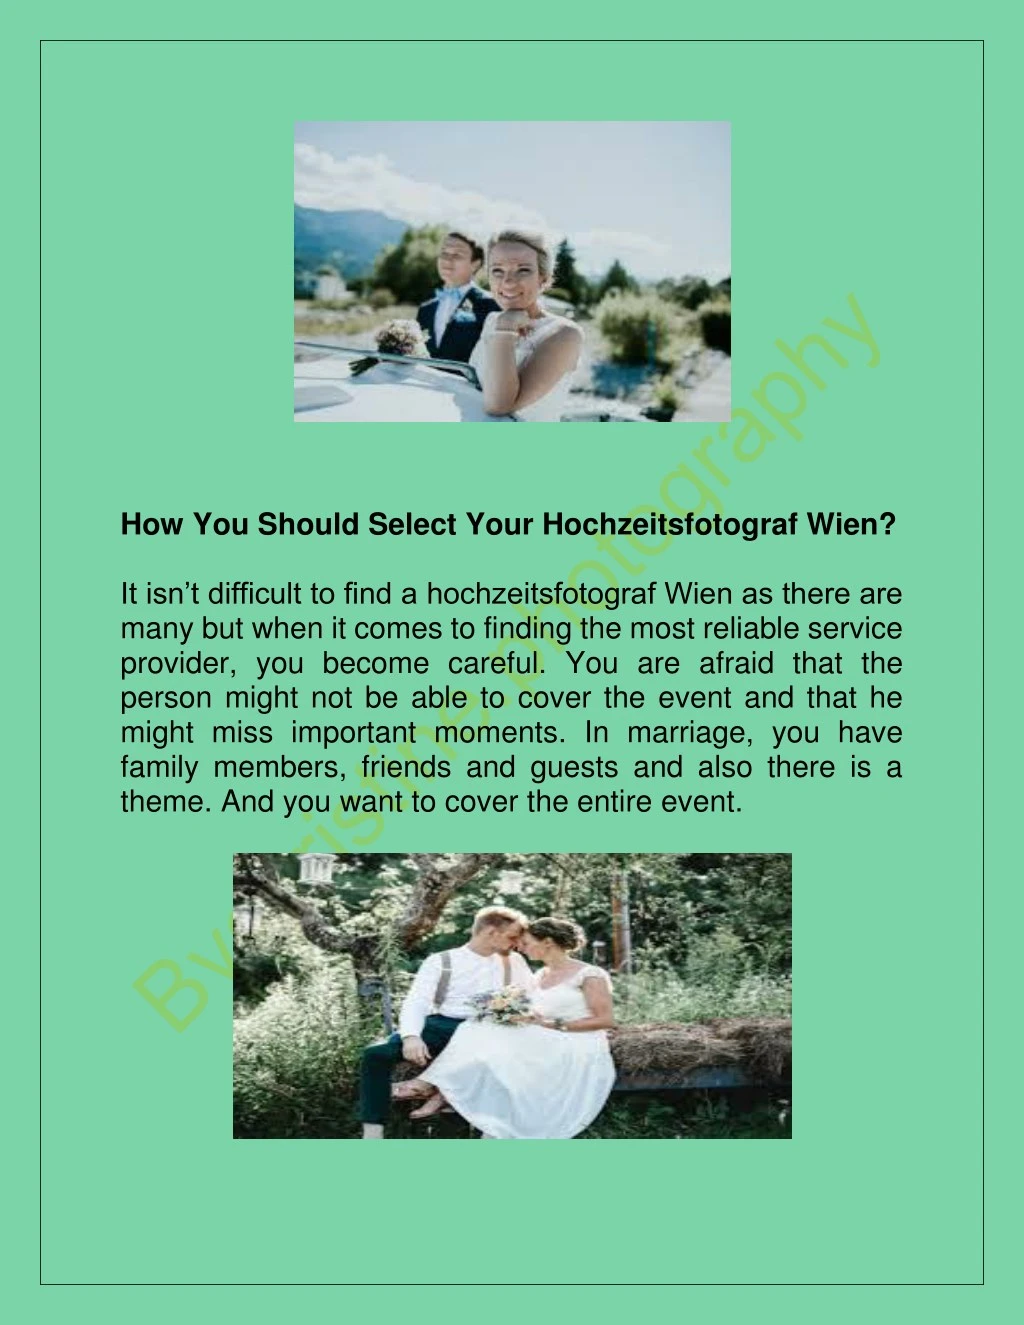 how you should select your hochzeitsfotograf wien